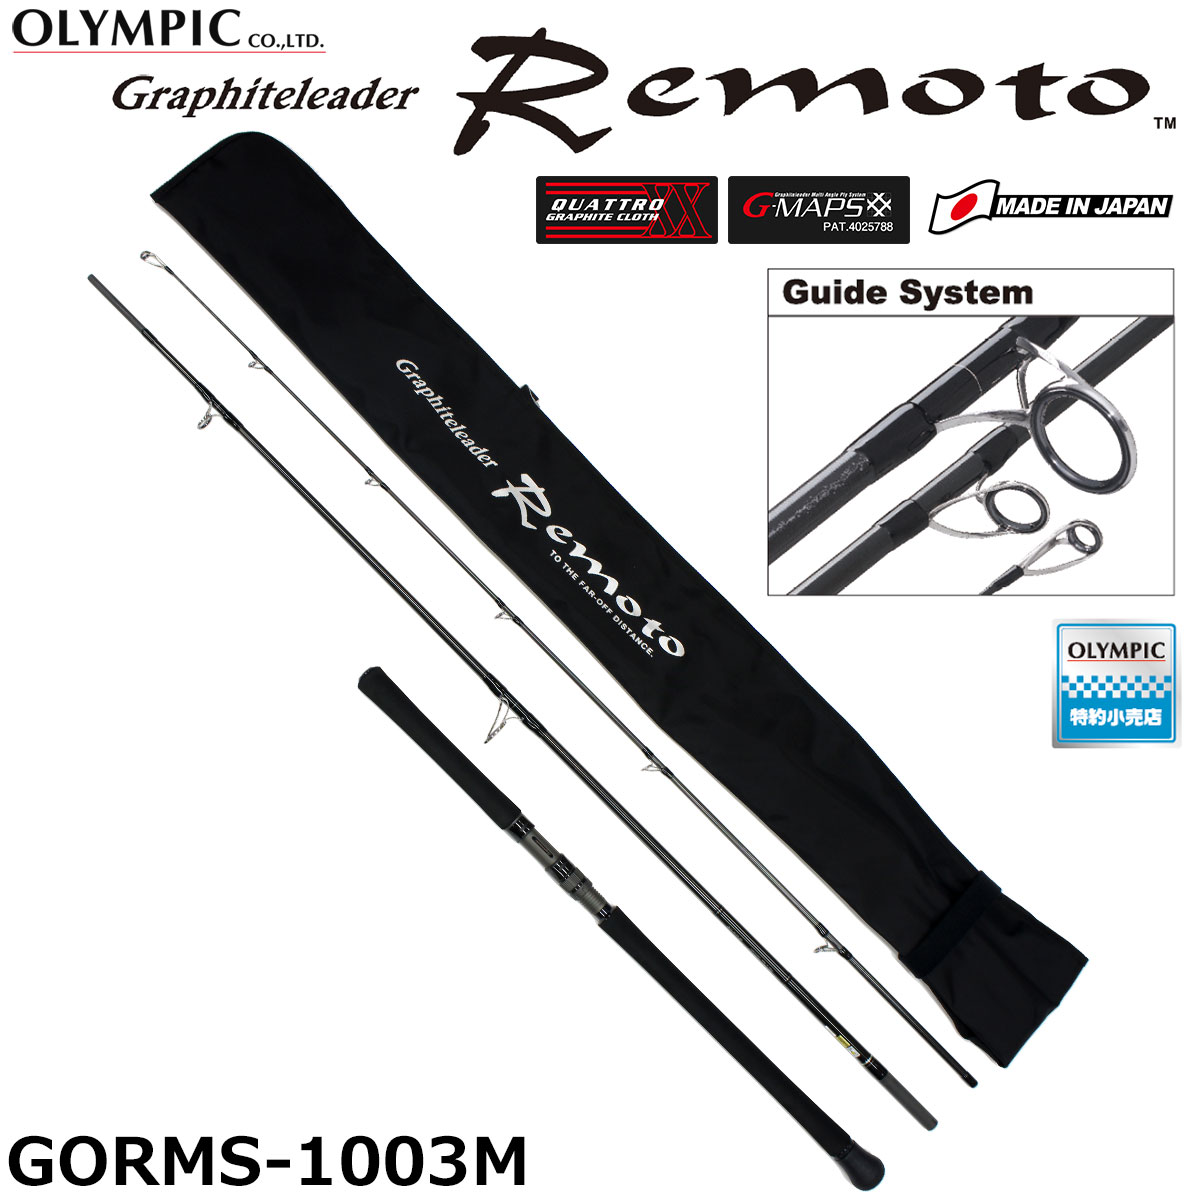 GRAPHITELEADER 19 REMOTO GORMS-1003M travel 3pc shore jigging rod 